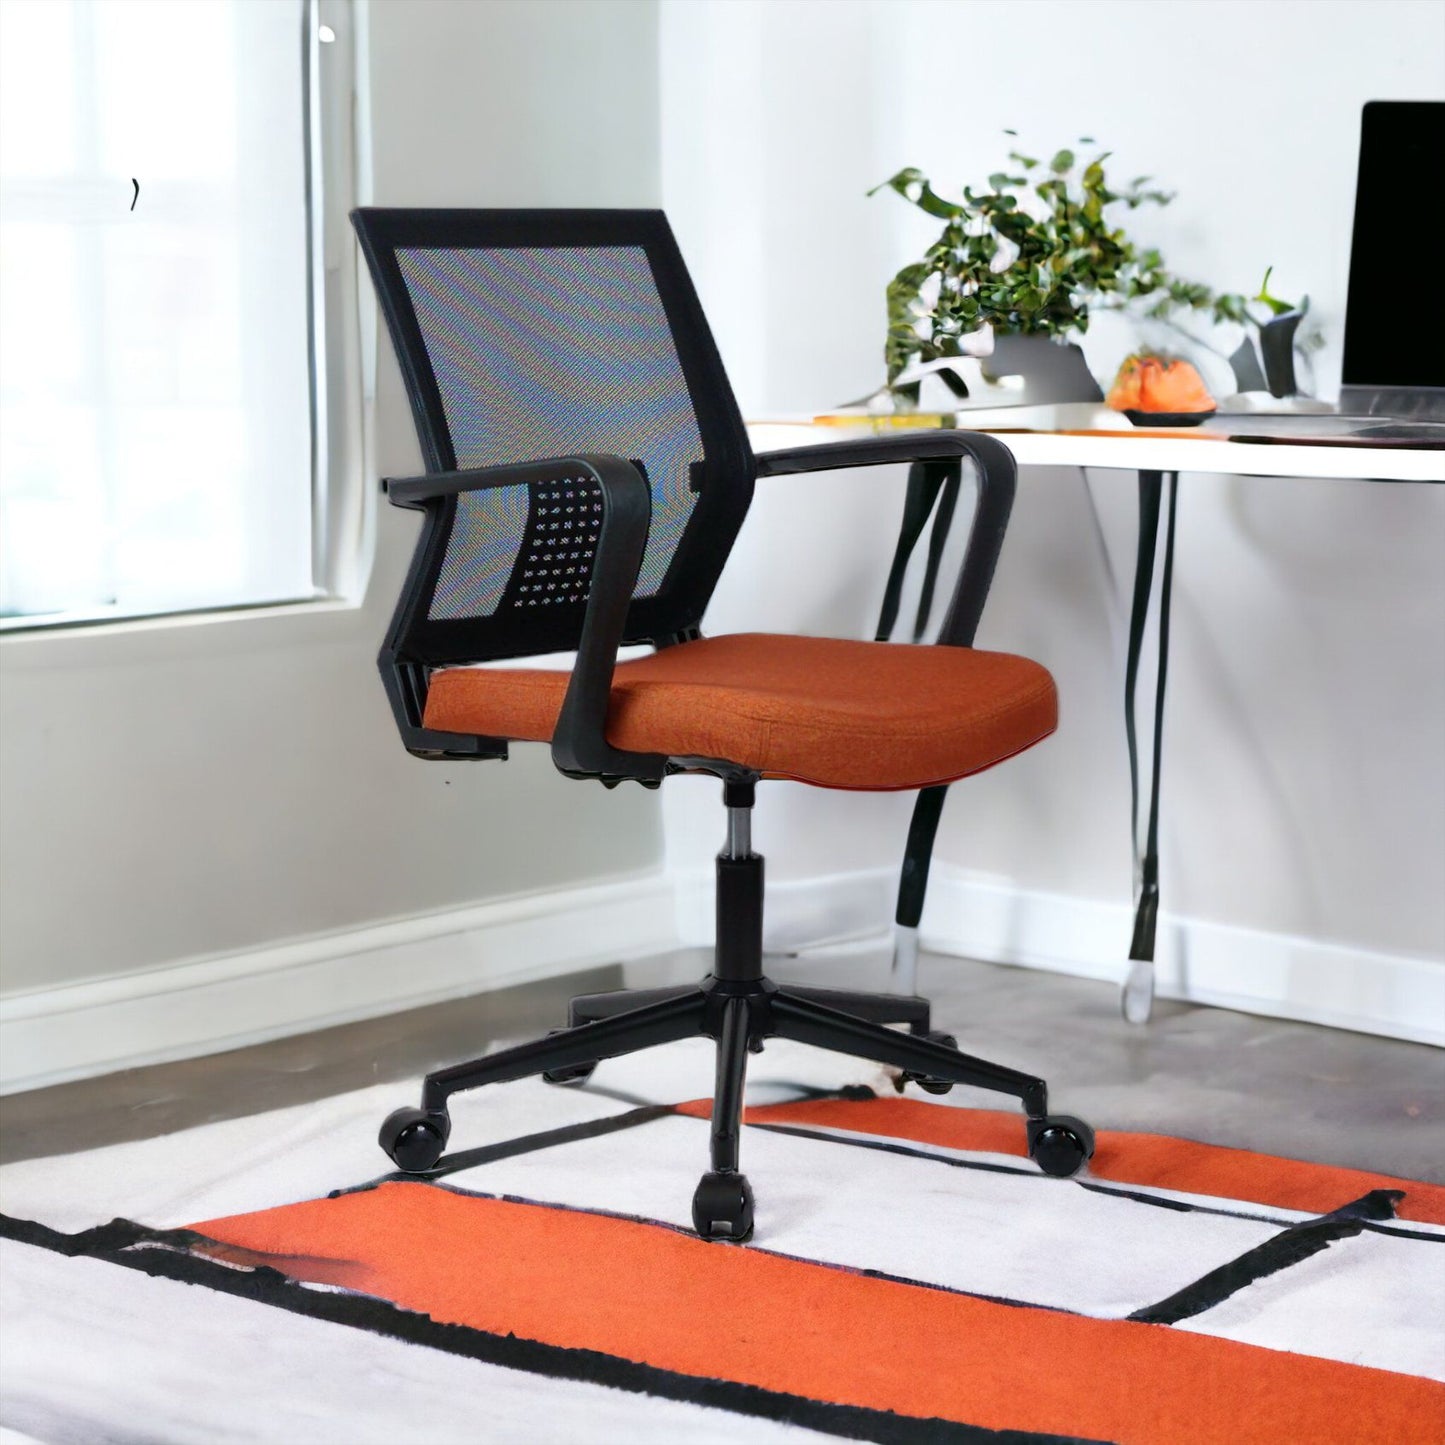 Mesh - Brown - Office Chair